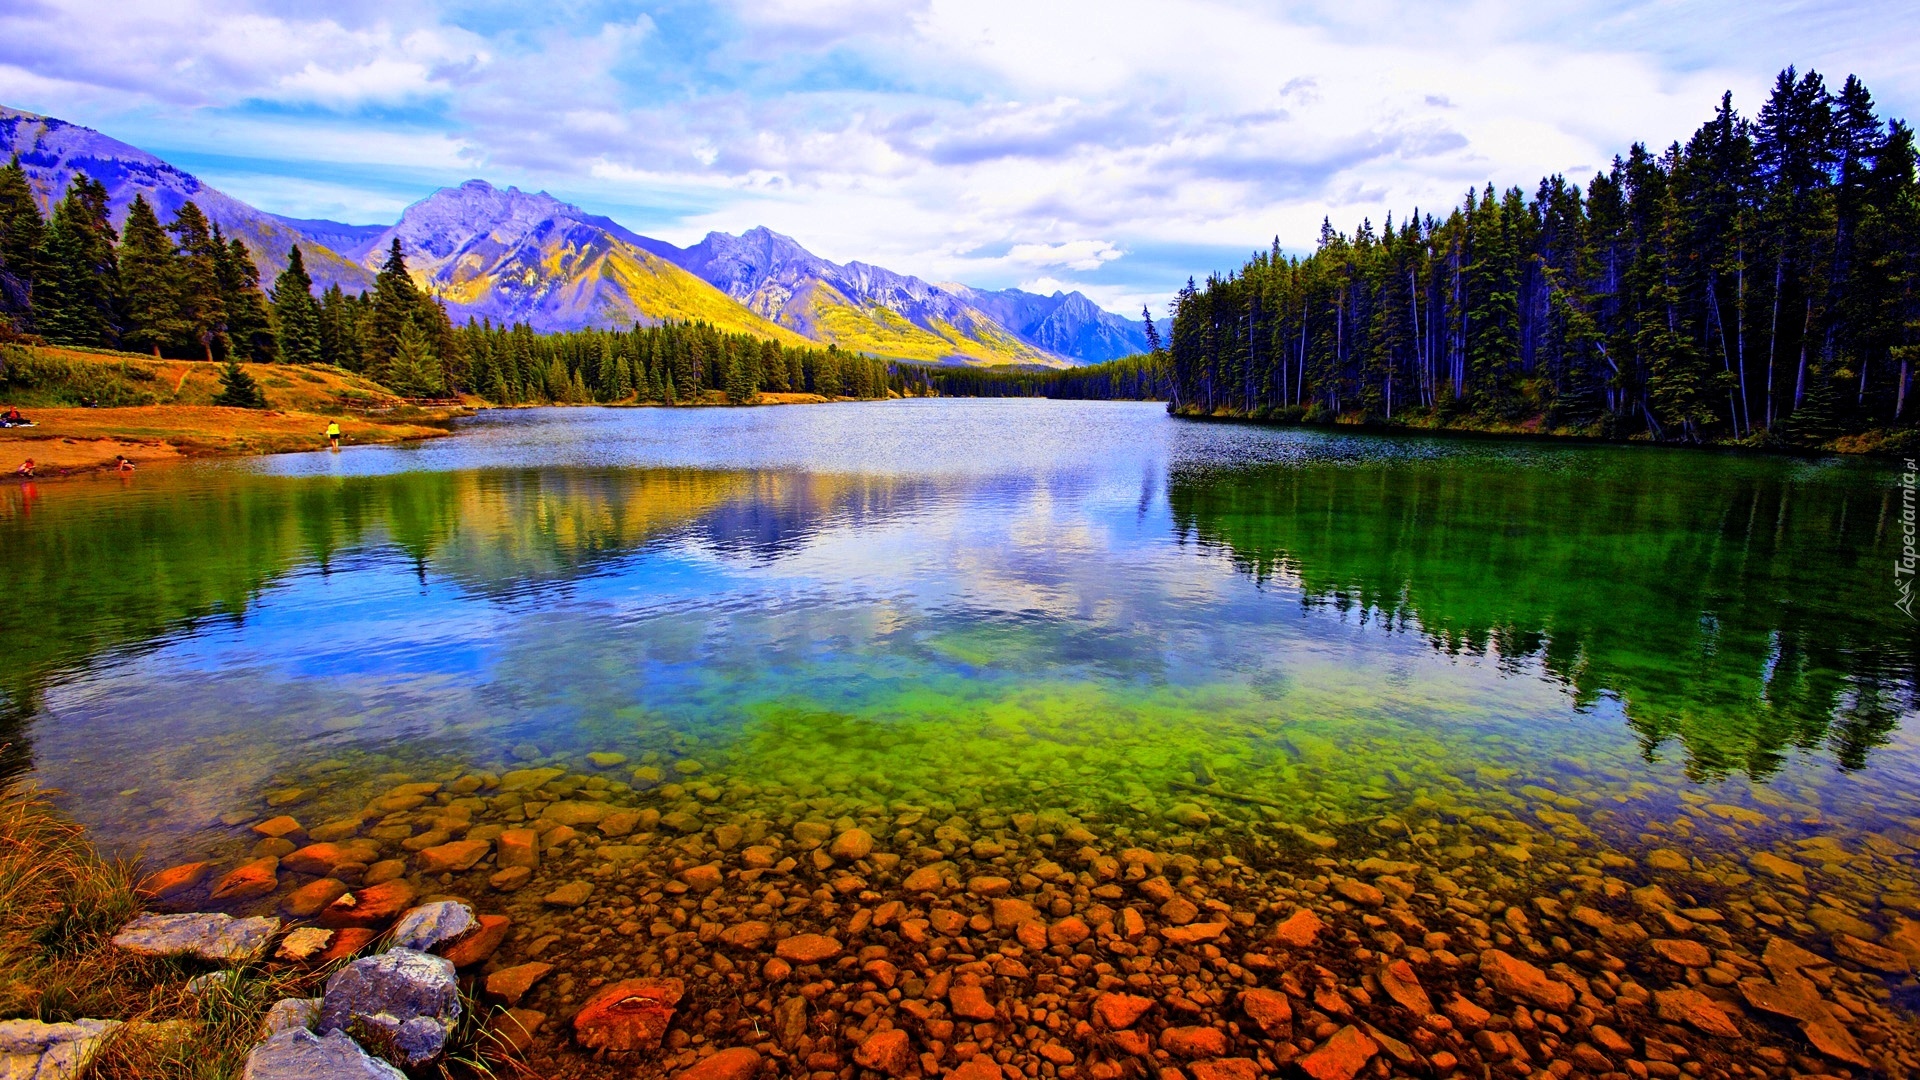 Kanada, Park Narodowy, Banff, Jezioro, Lasy, Góry